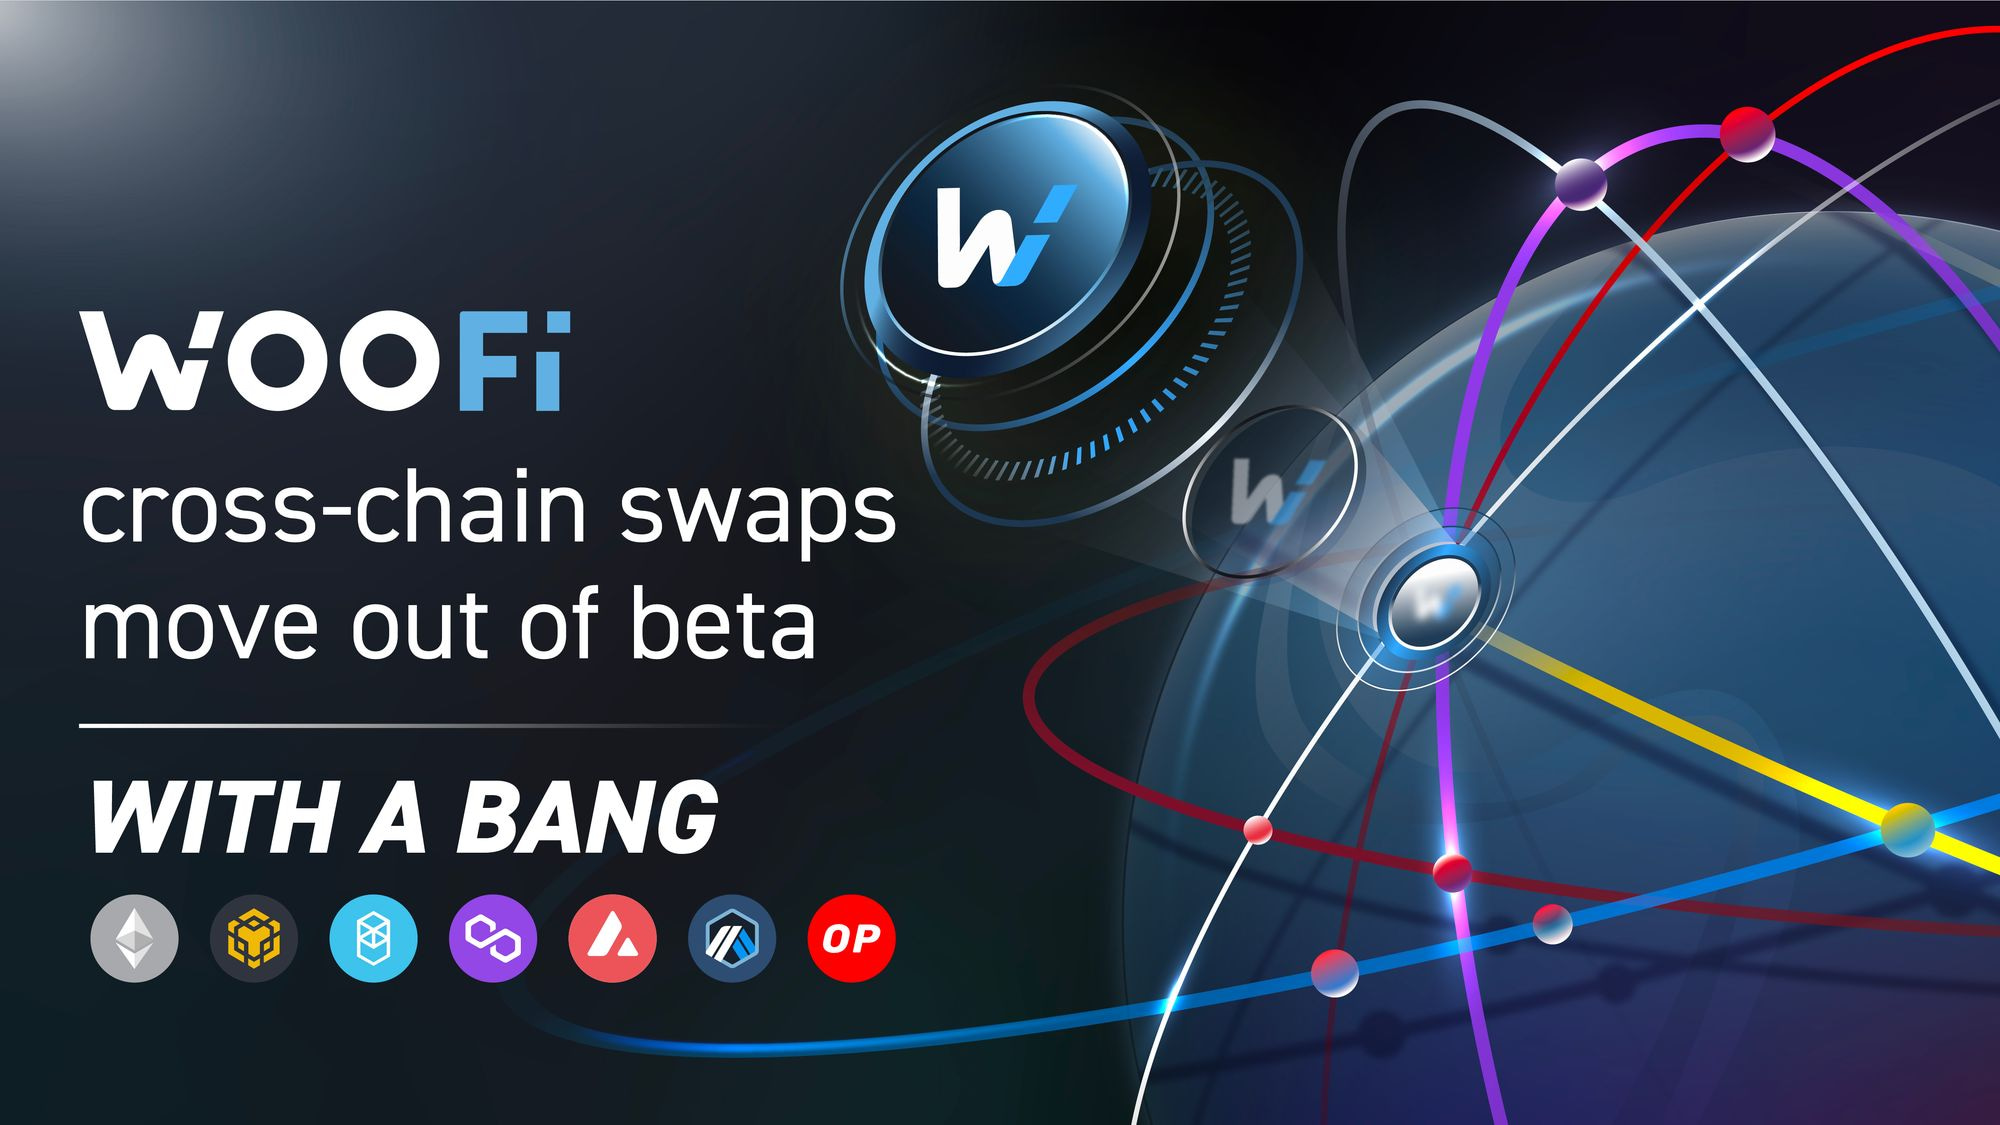 WOOFi unlocks new cross-chain capabilities for DeFi traders